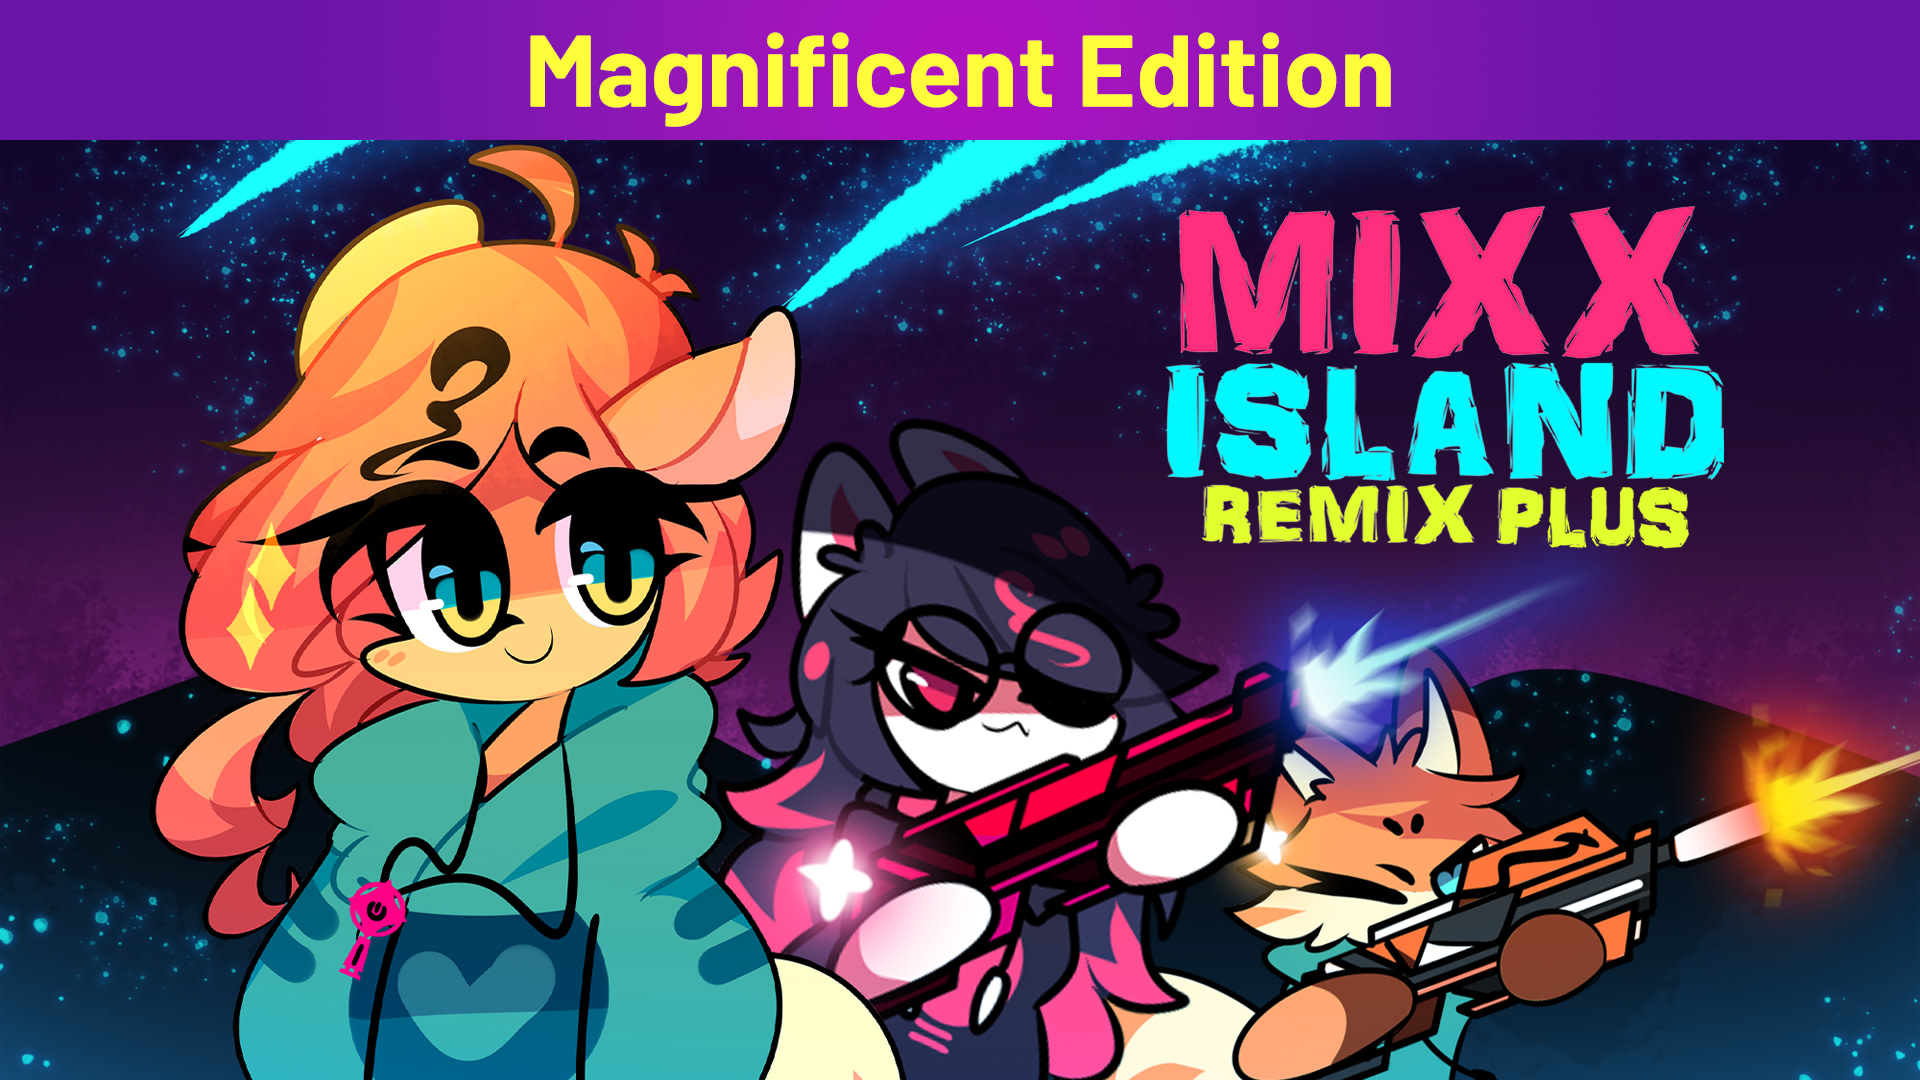 Mixx Island: Remix Plus Magnificent Edition 1